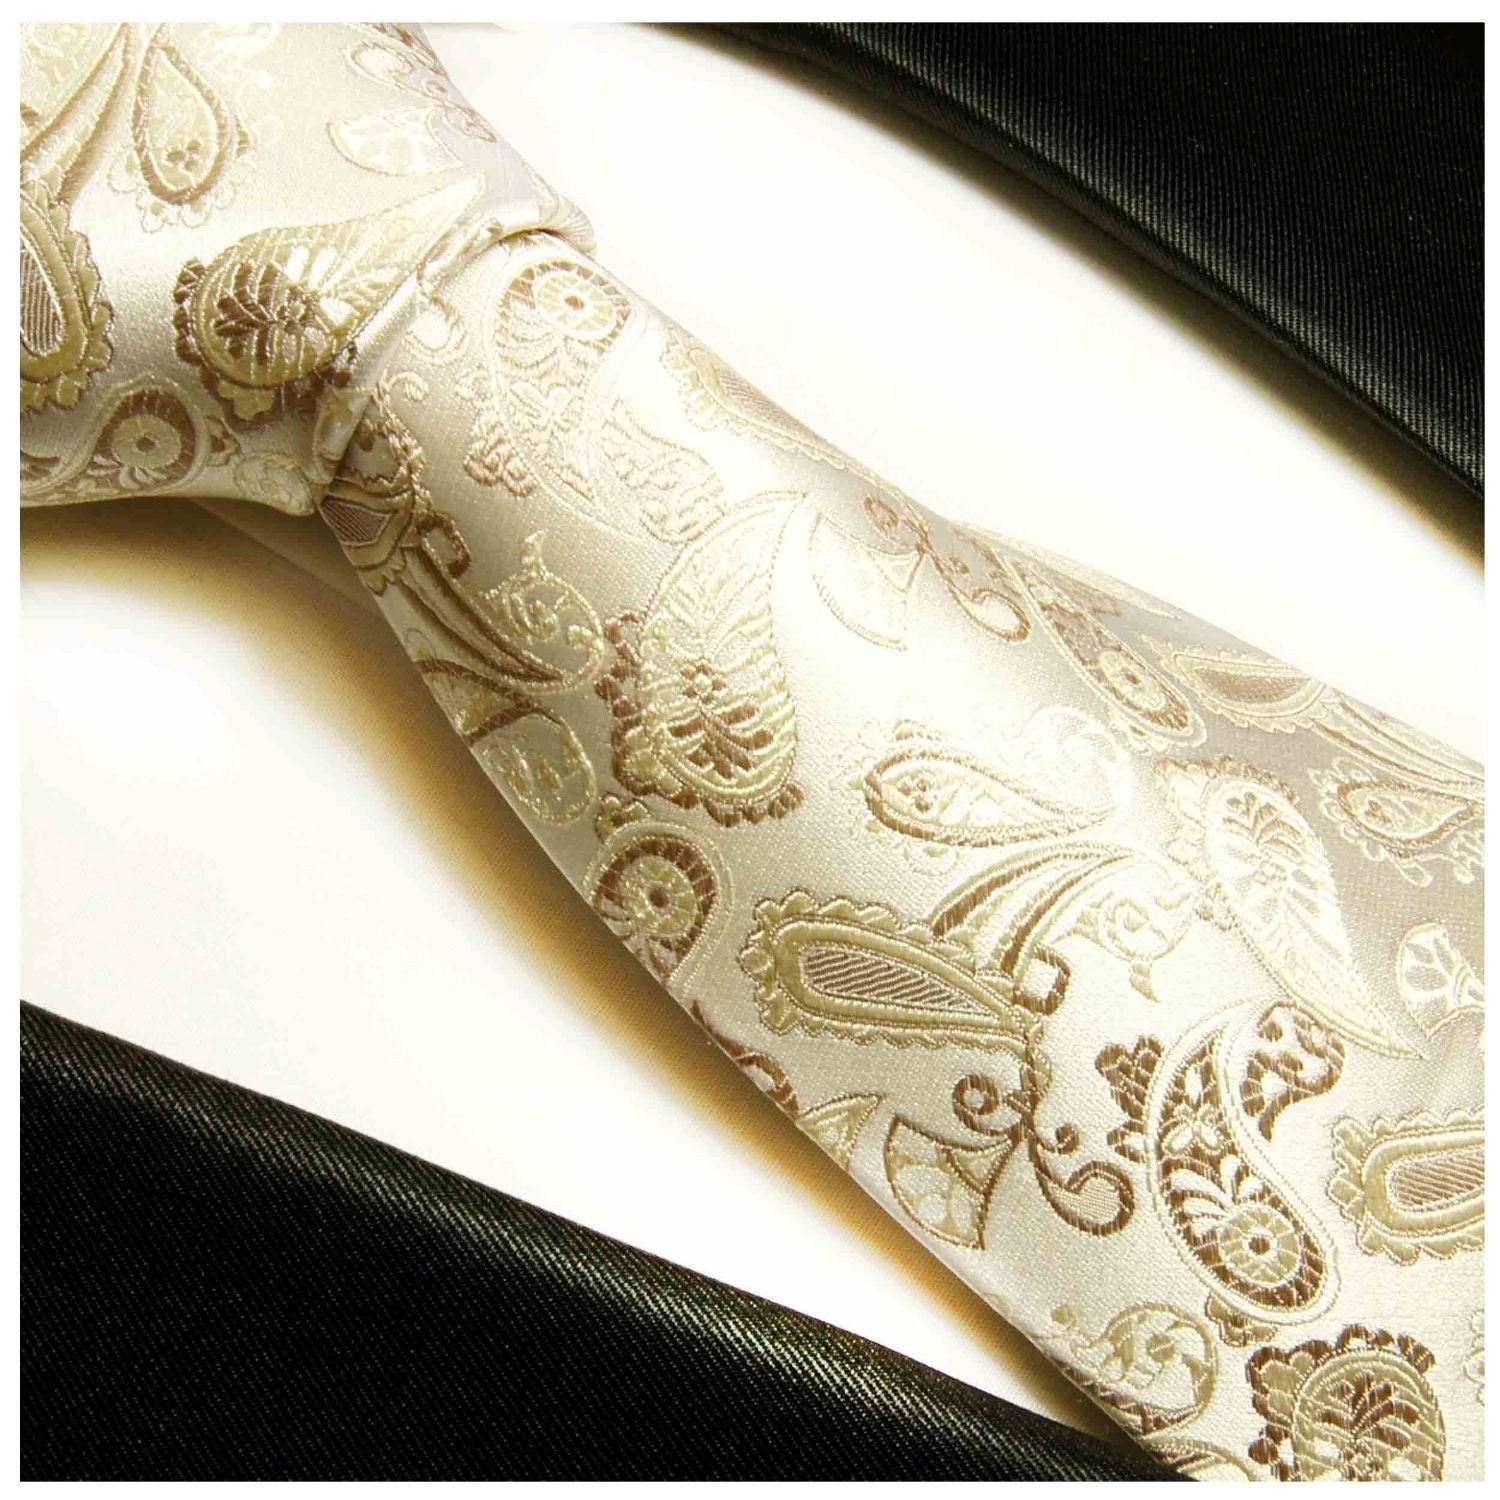 Paul Malone Krawatte Elegante Seidenkrawatte braun Herren paisley Breit (8cm), 762 Seide 100% brokat Schlips ivory